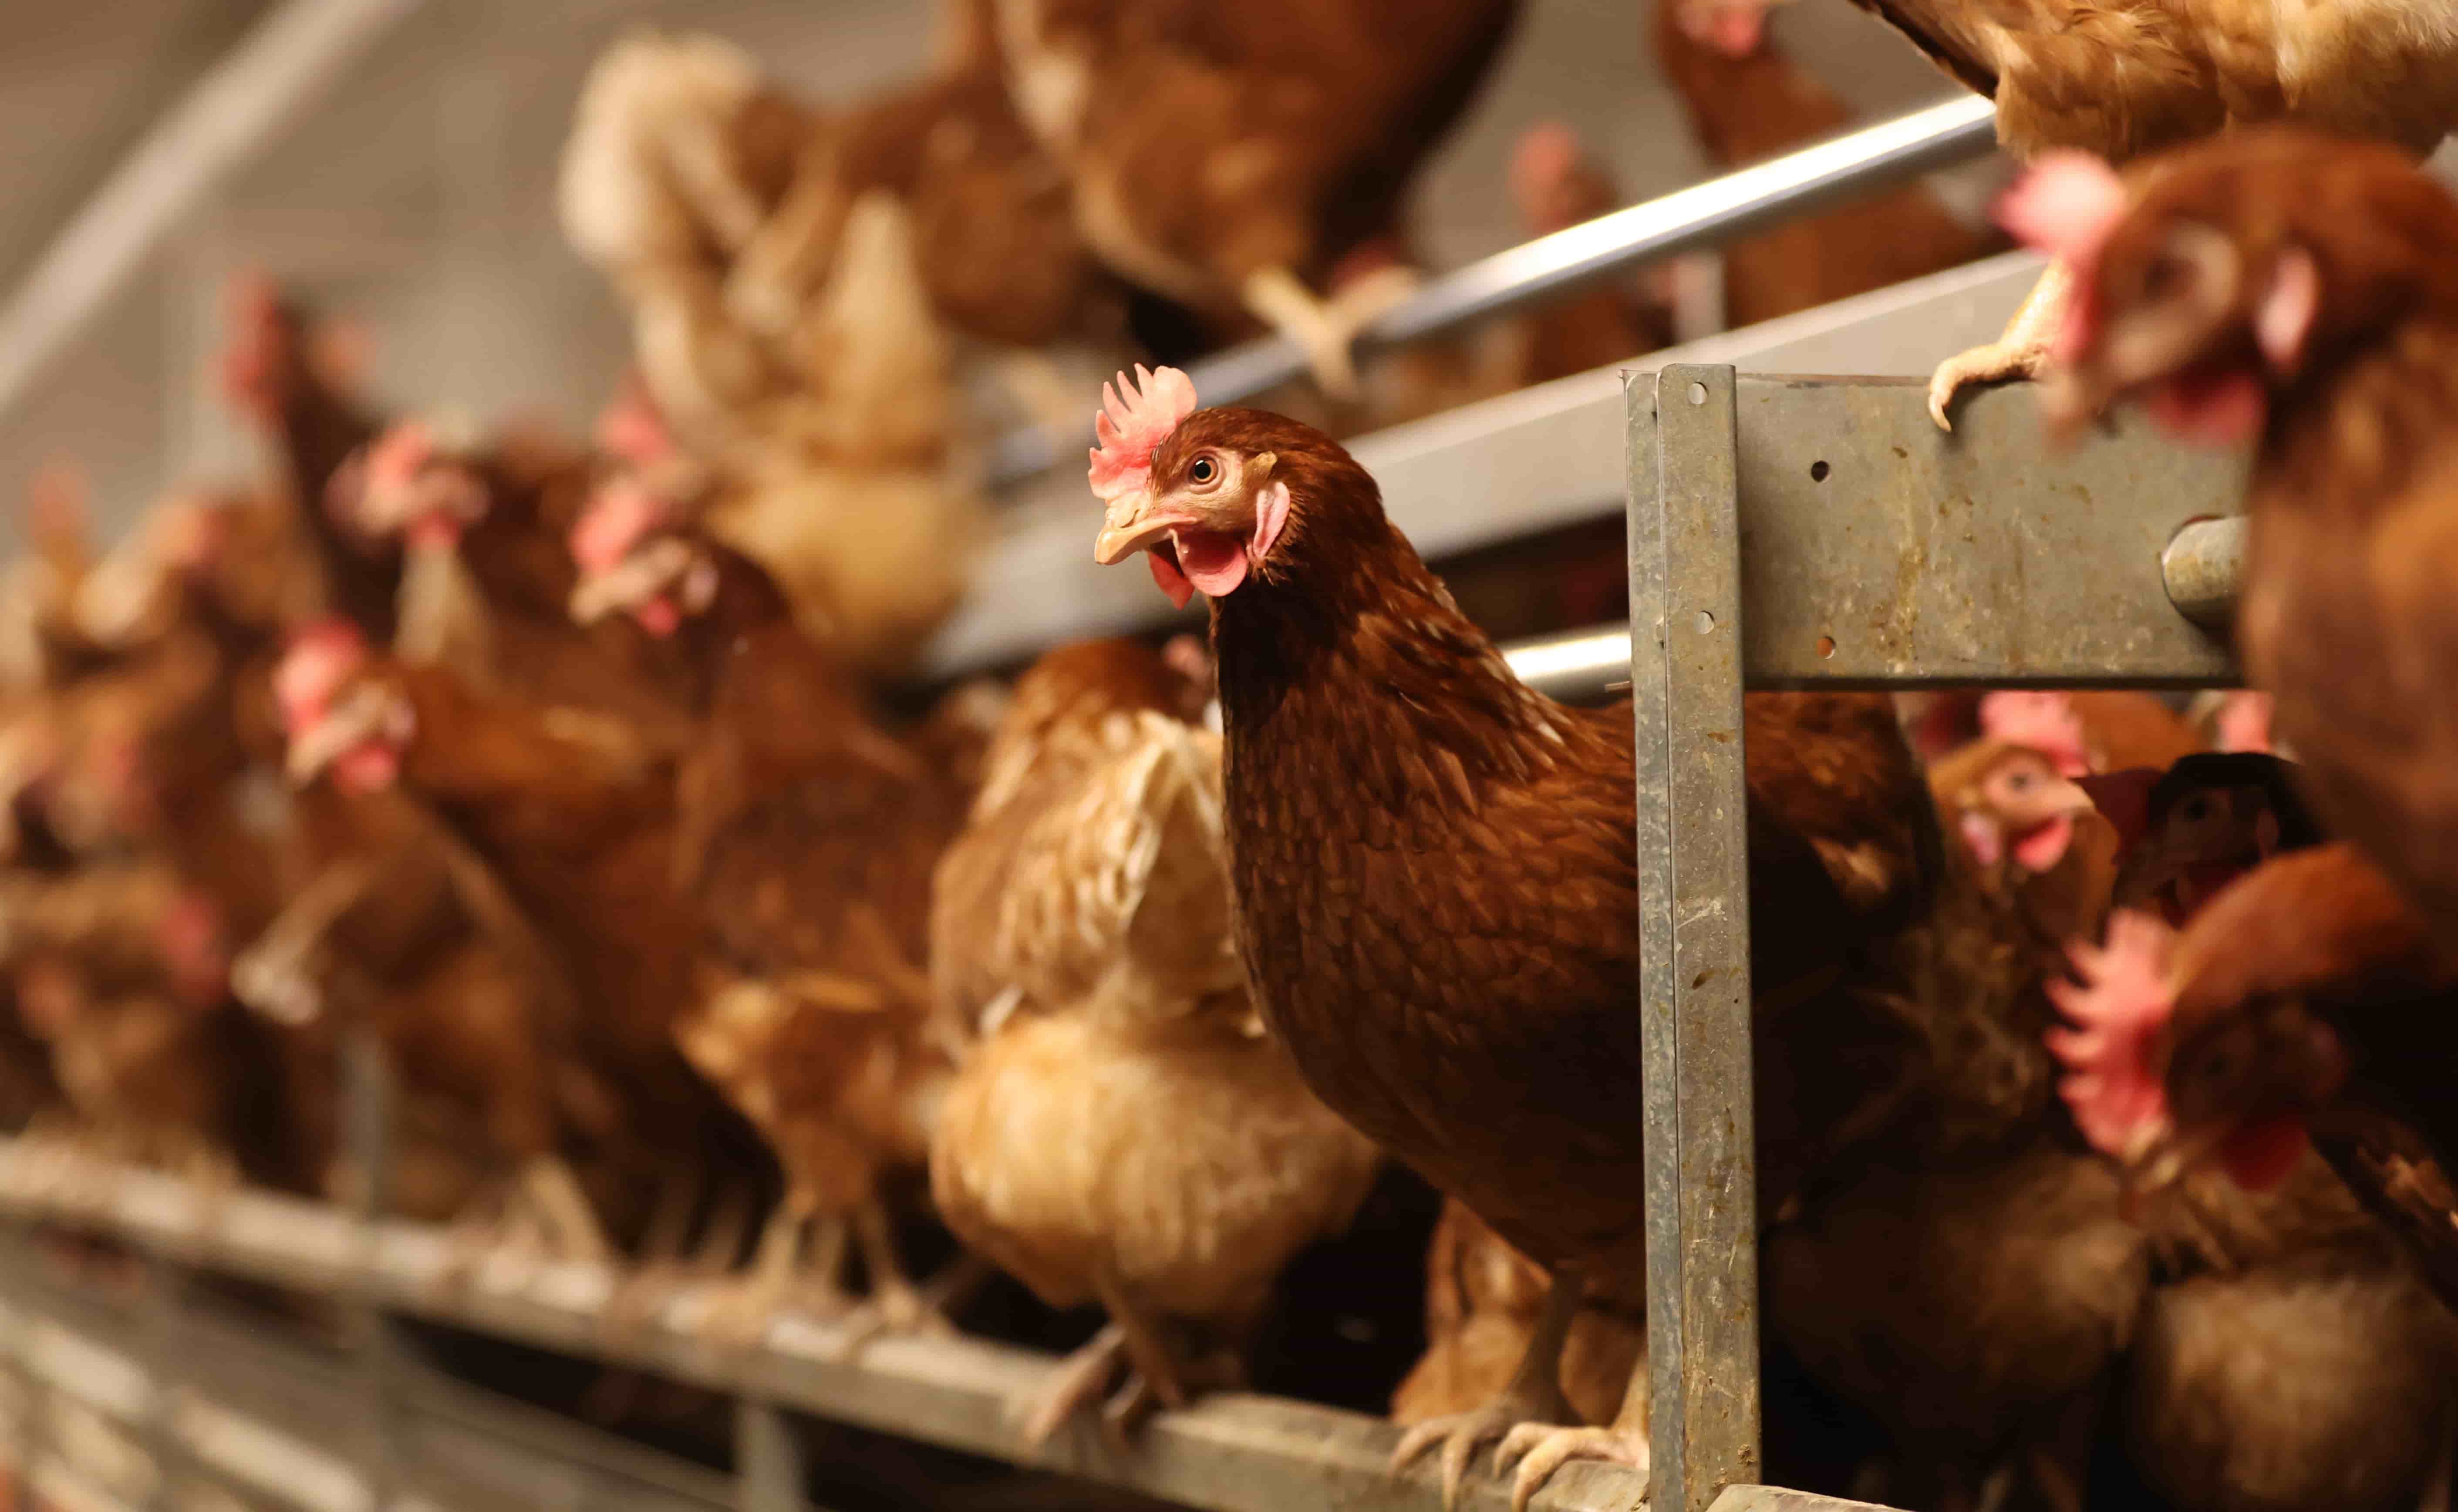 Bird Flu Traces Found in 20% of Retail Milk Samples